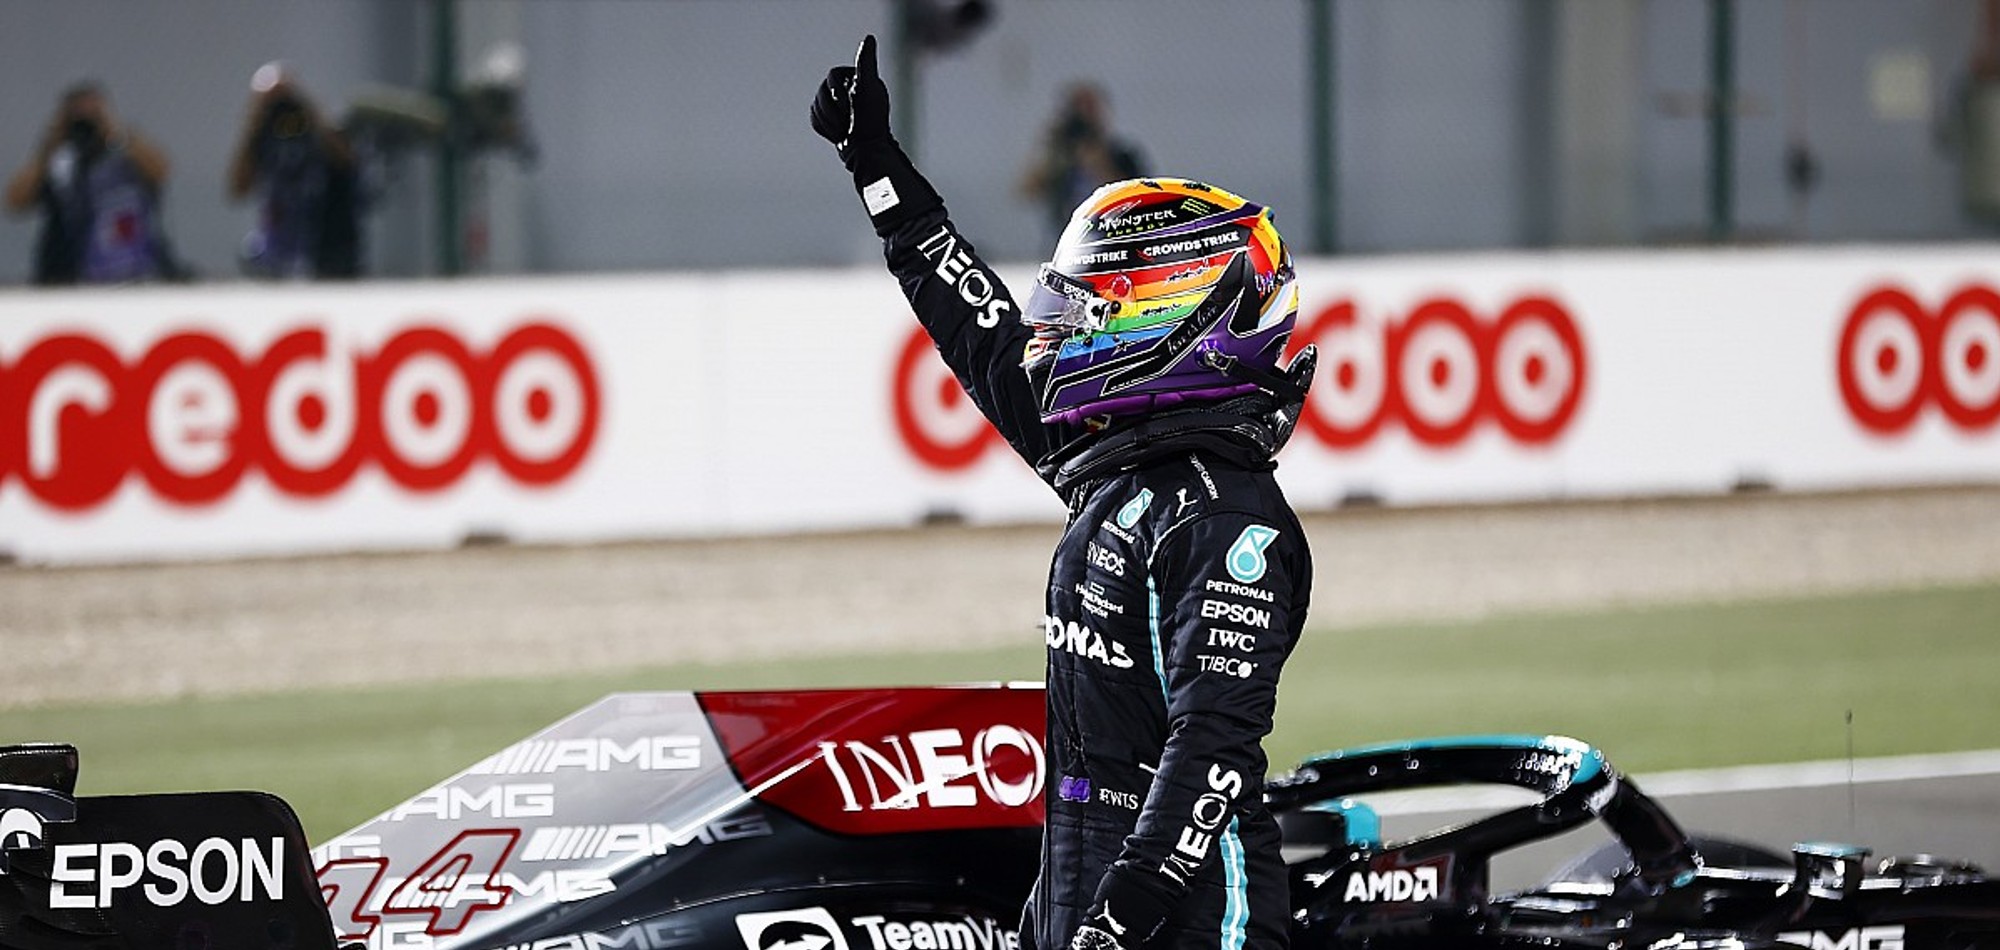 Ooredoo Qatar Grand Prix: Hamilton storms to pole ahead of Verstappen